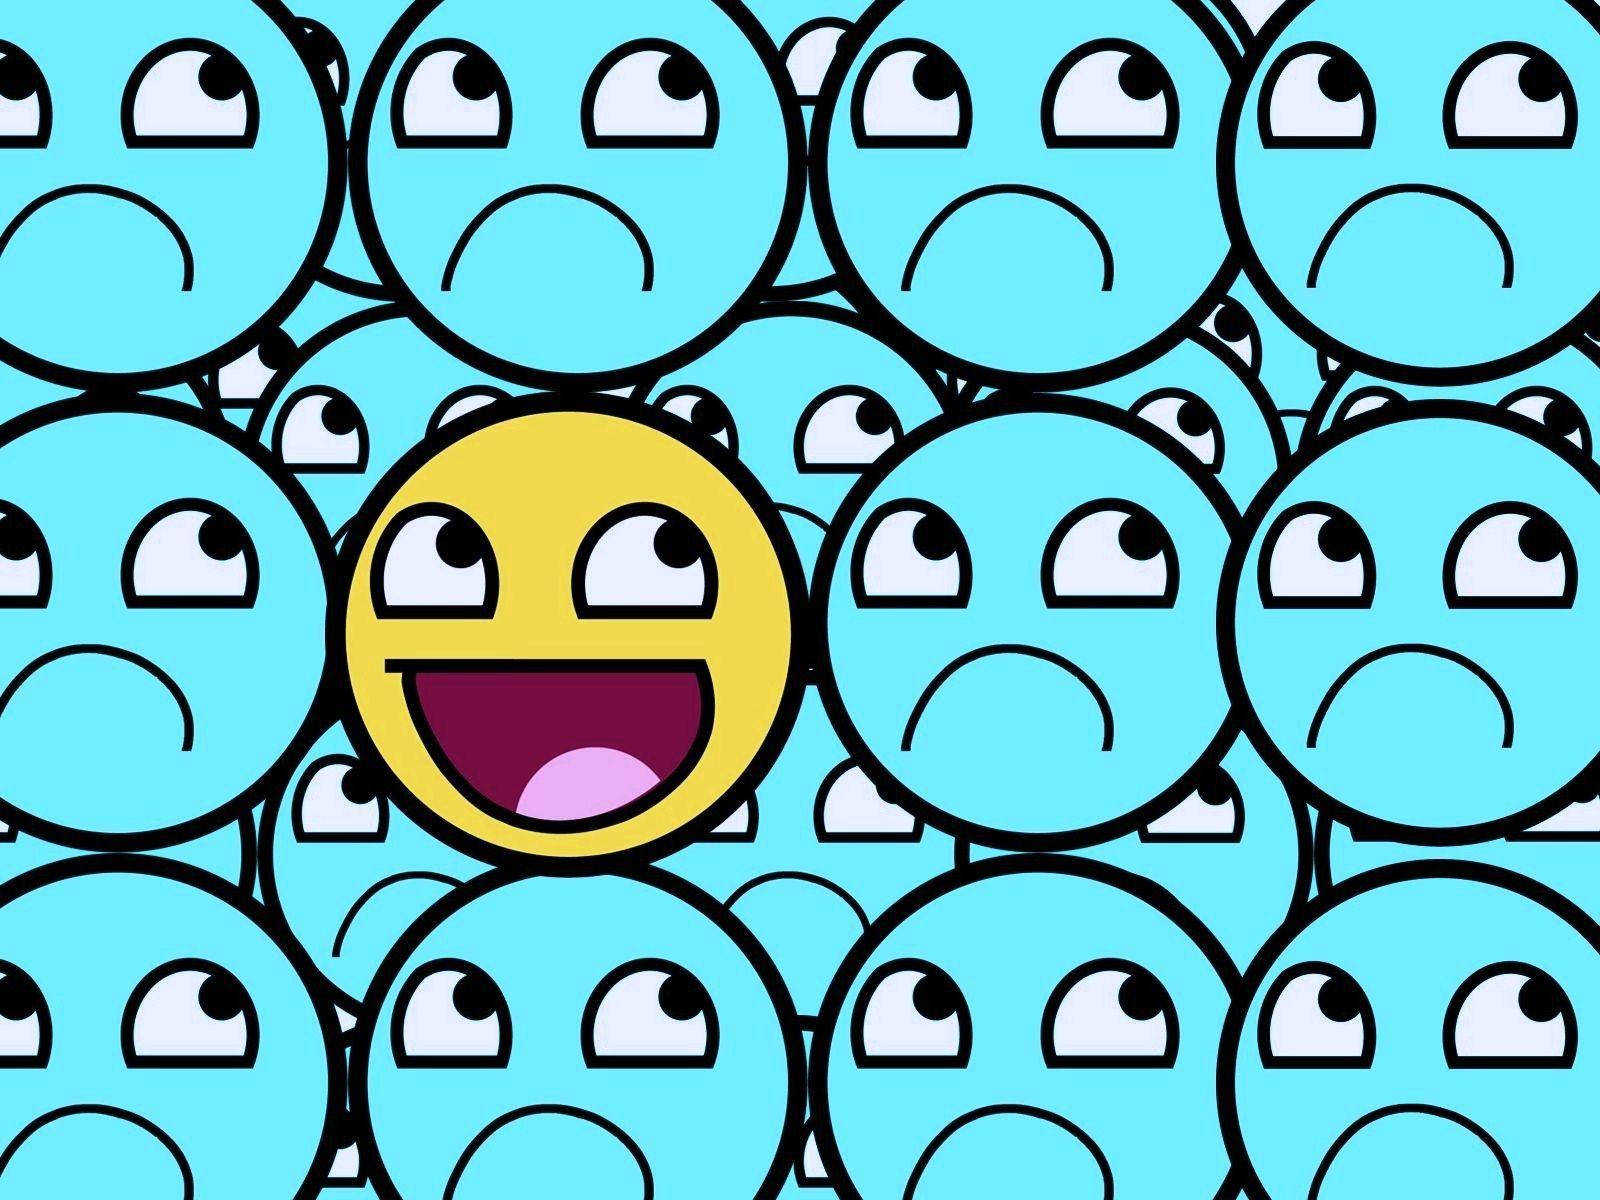 Sad Emojis And A Happy Face